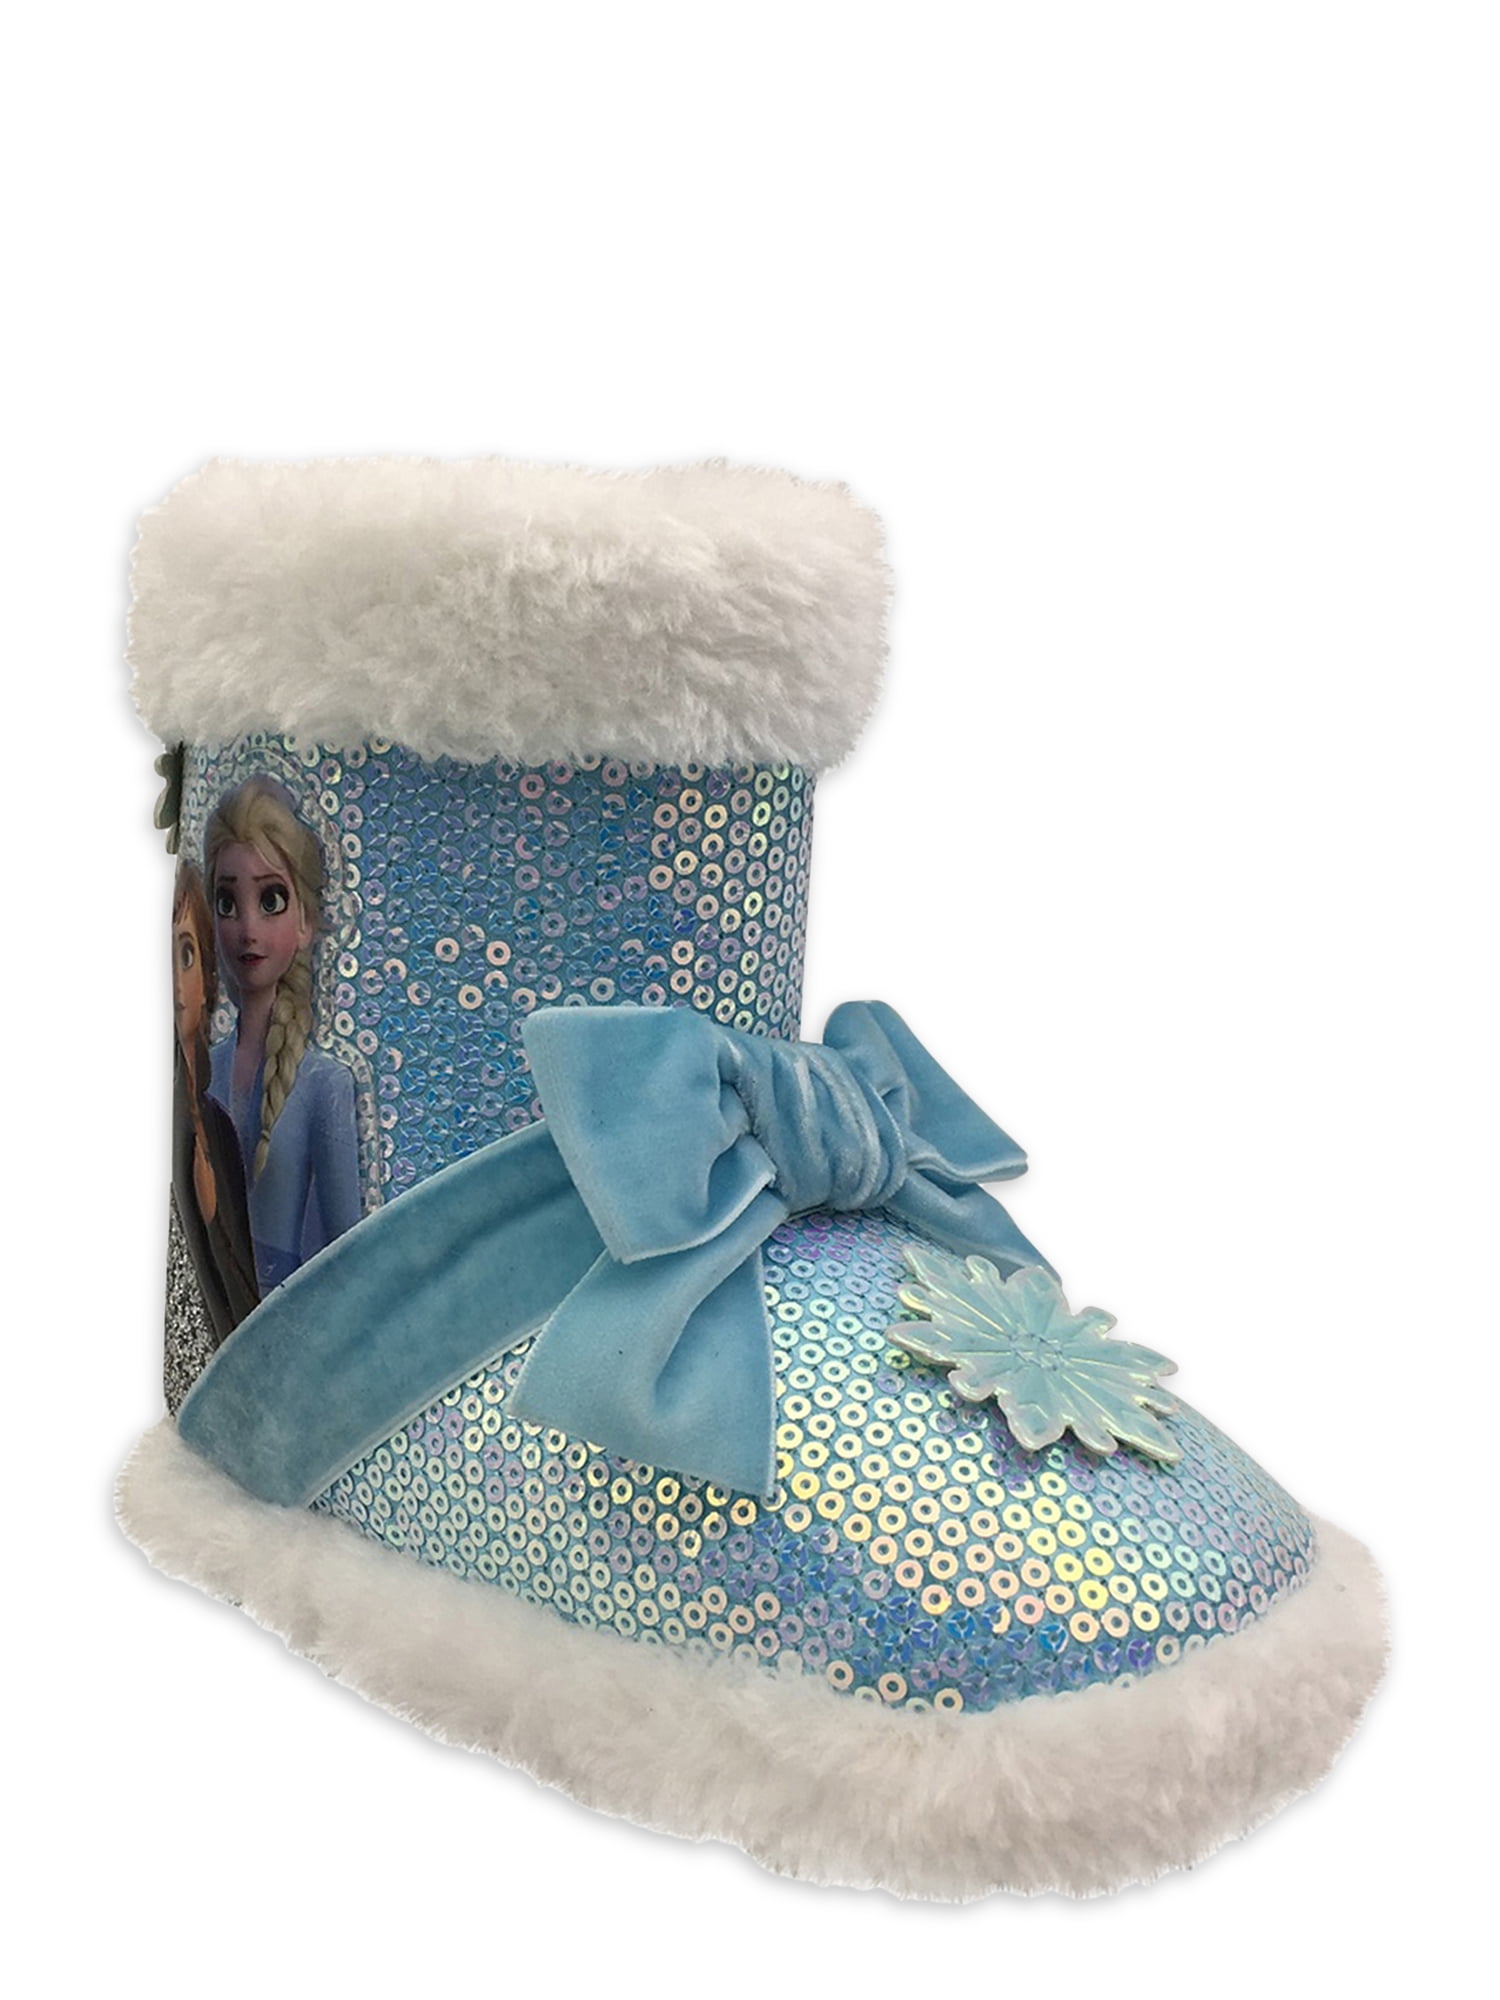 NEW Disney Frozen Children's Slipper Socks featuring a delightful Anna design 